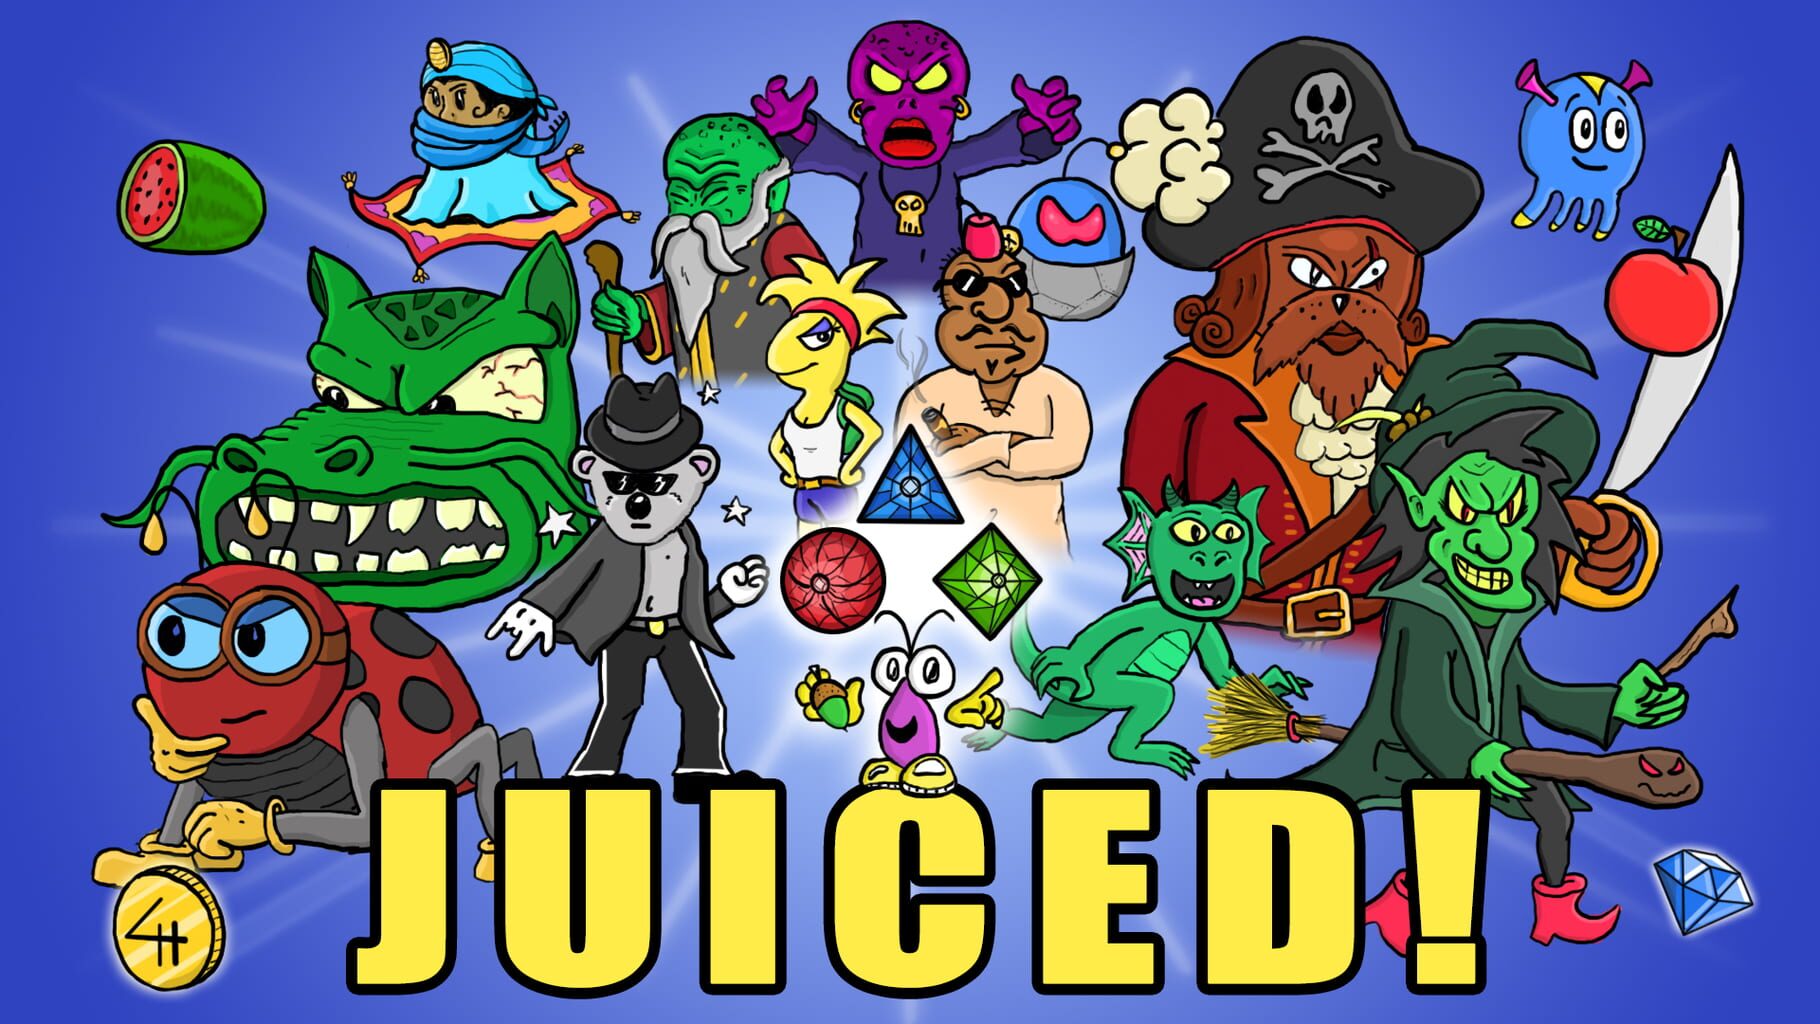 Juiced! artwork